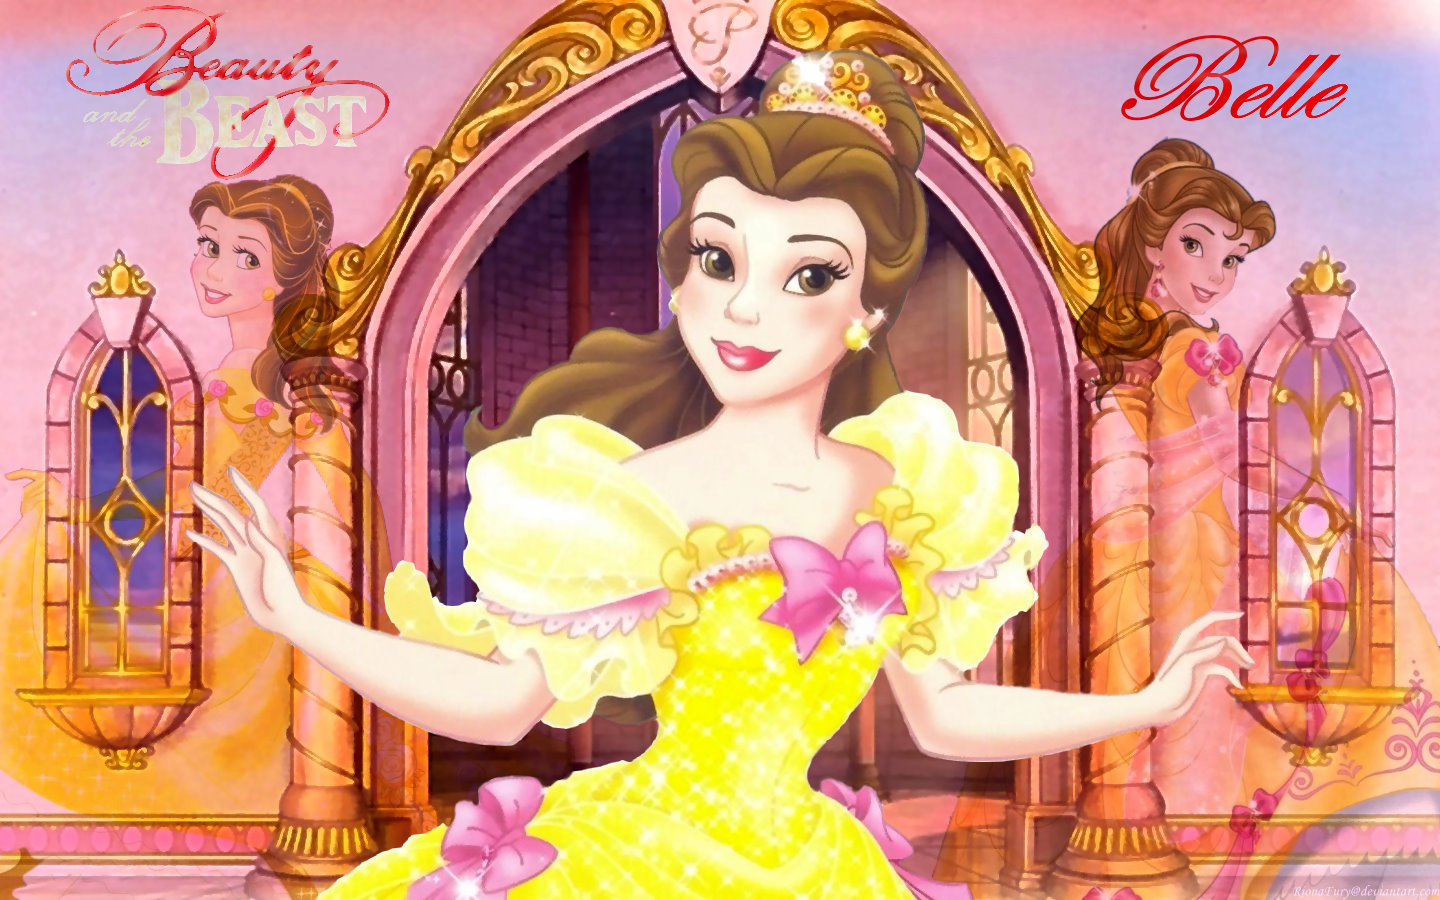 Disney Princess Belle - Disney Princess Wallpaper (23743209) - Fanpop